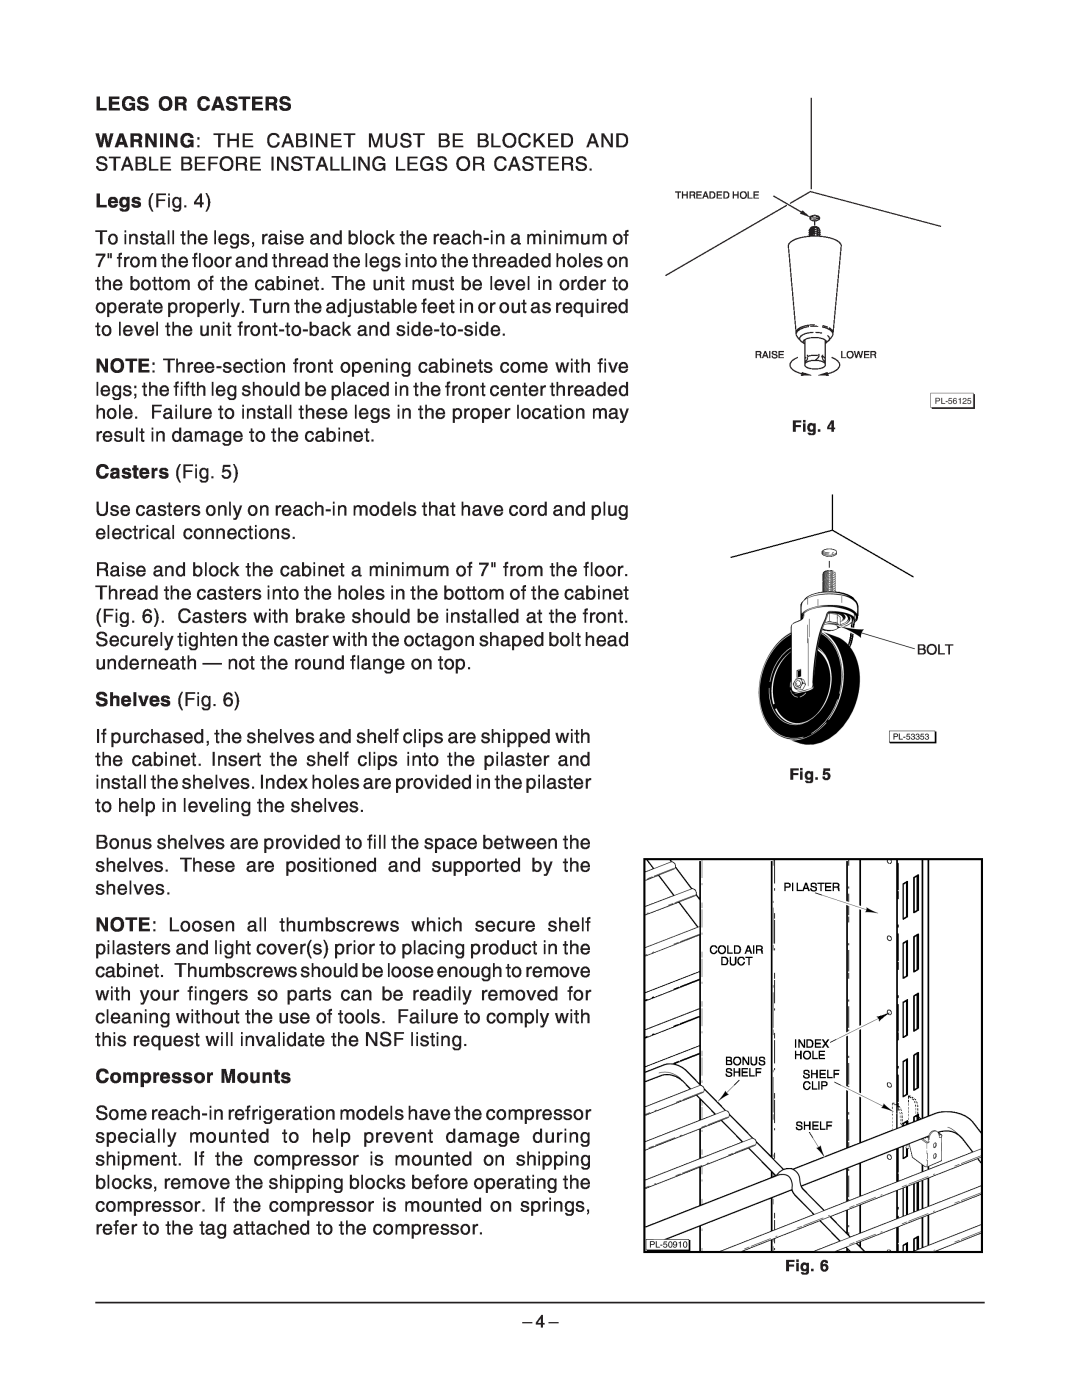 Hobart D Series manual Legs Or Casters, Casters Fig, Shelves Fig, Compressor Mounts 